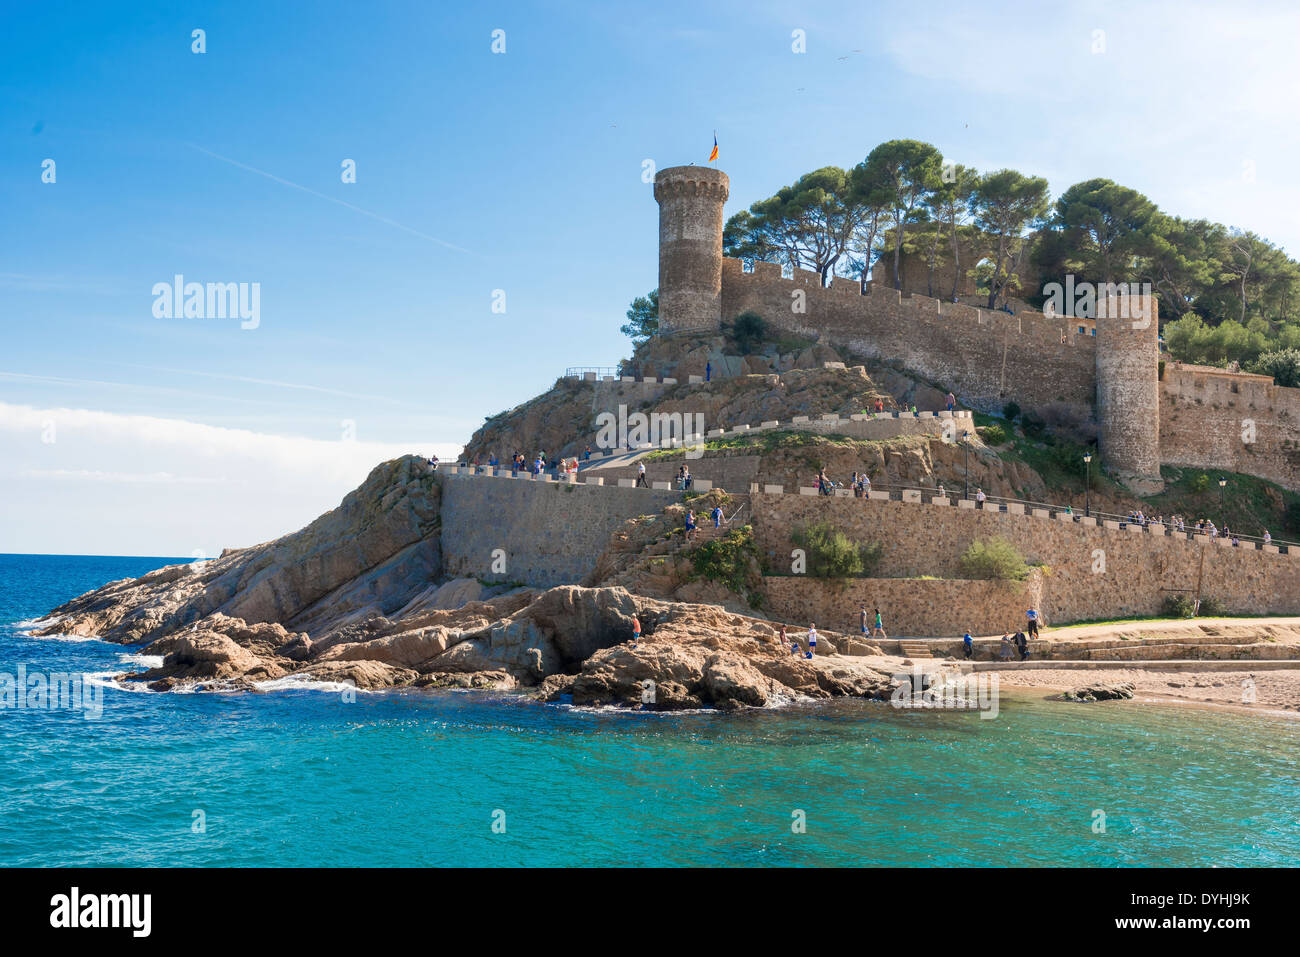 Tossa de Mar, Spain - October 13: Tourist at the beach and medieval castle in Tossa de Mar, Catalonia, Spain, Costa Brava Stock Photo